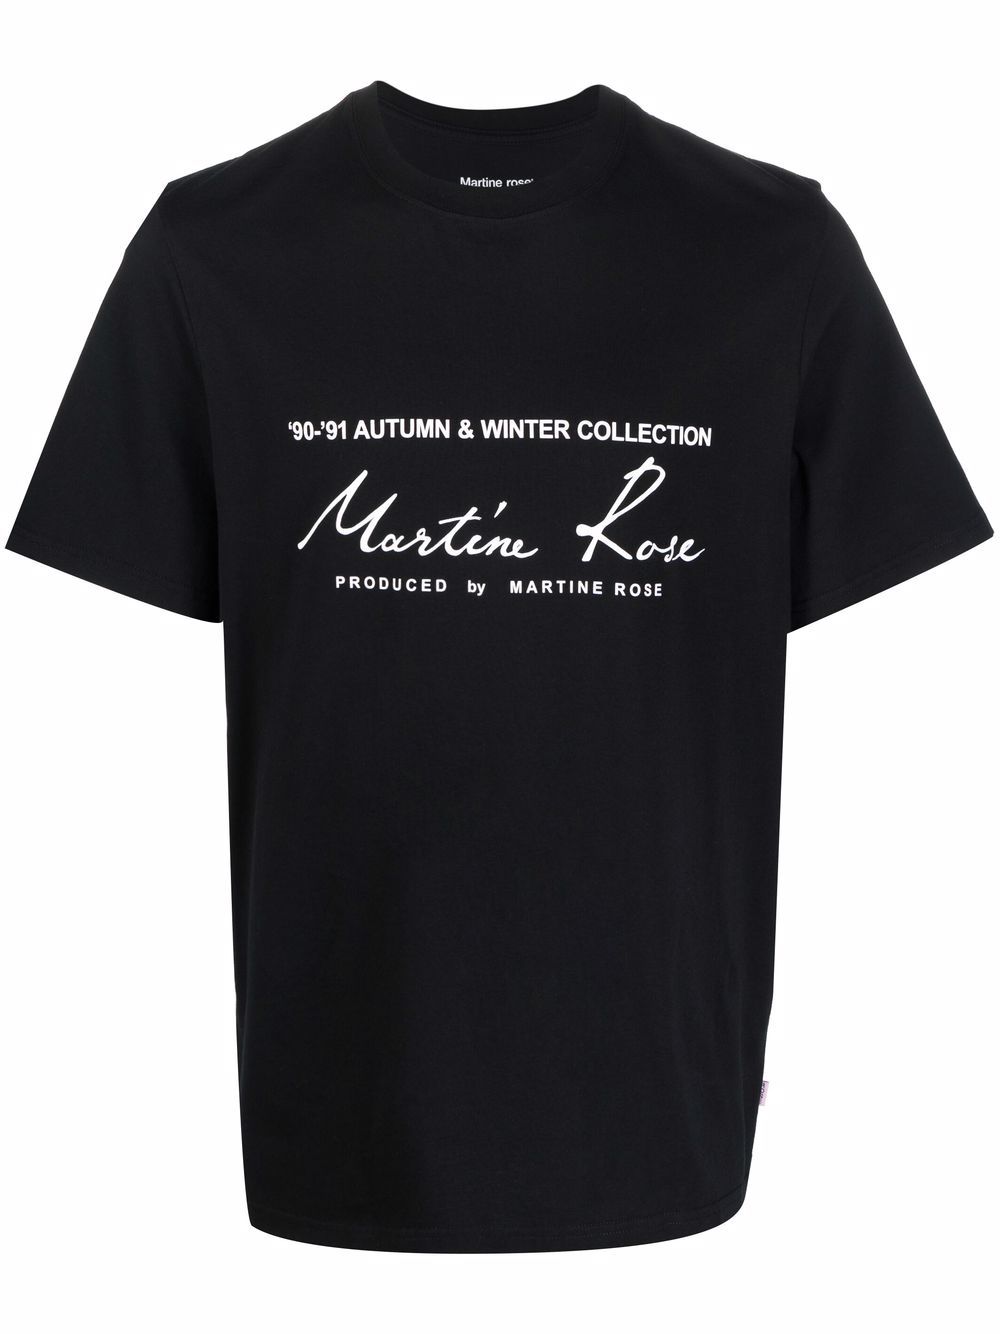 фото Martine rose футболка с логотипом